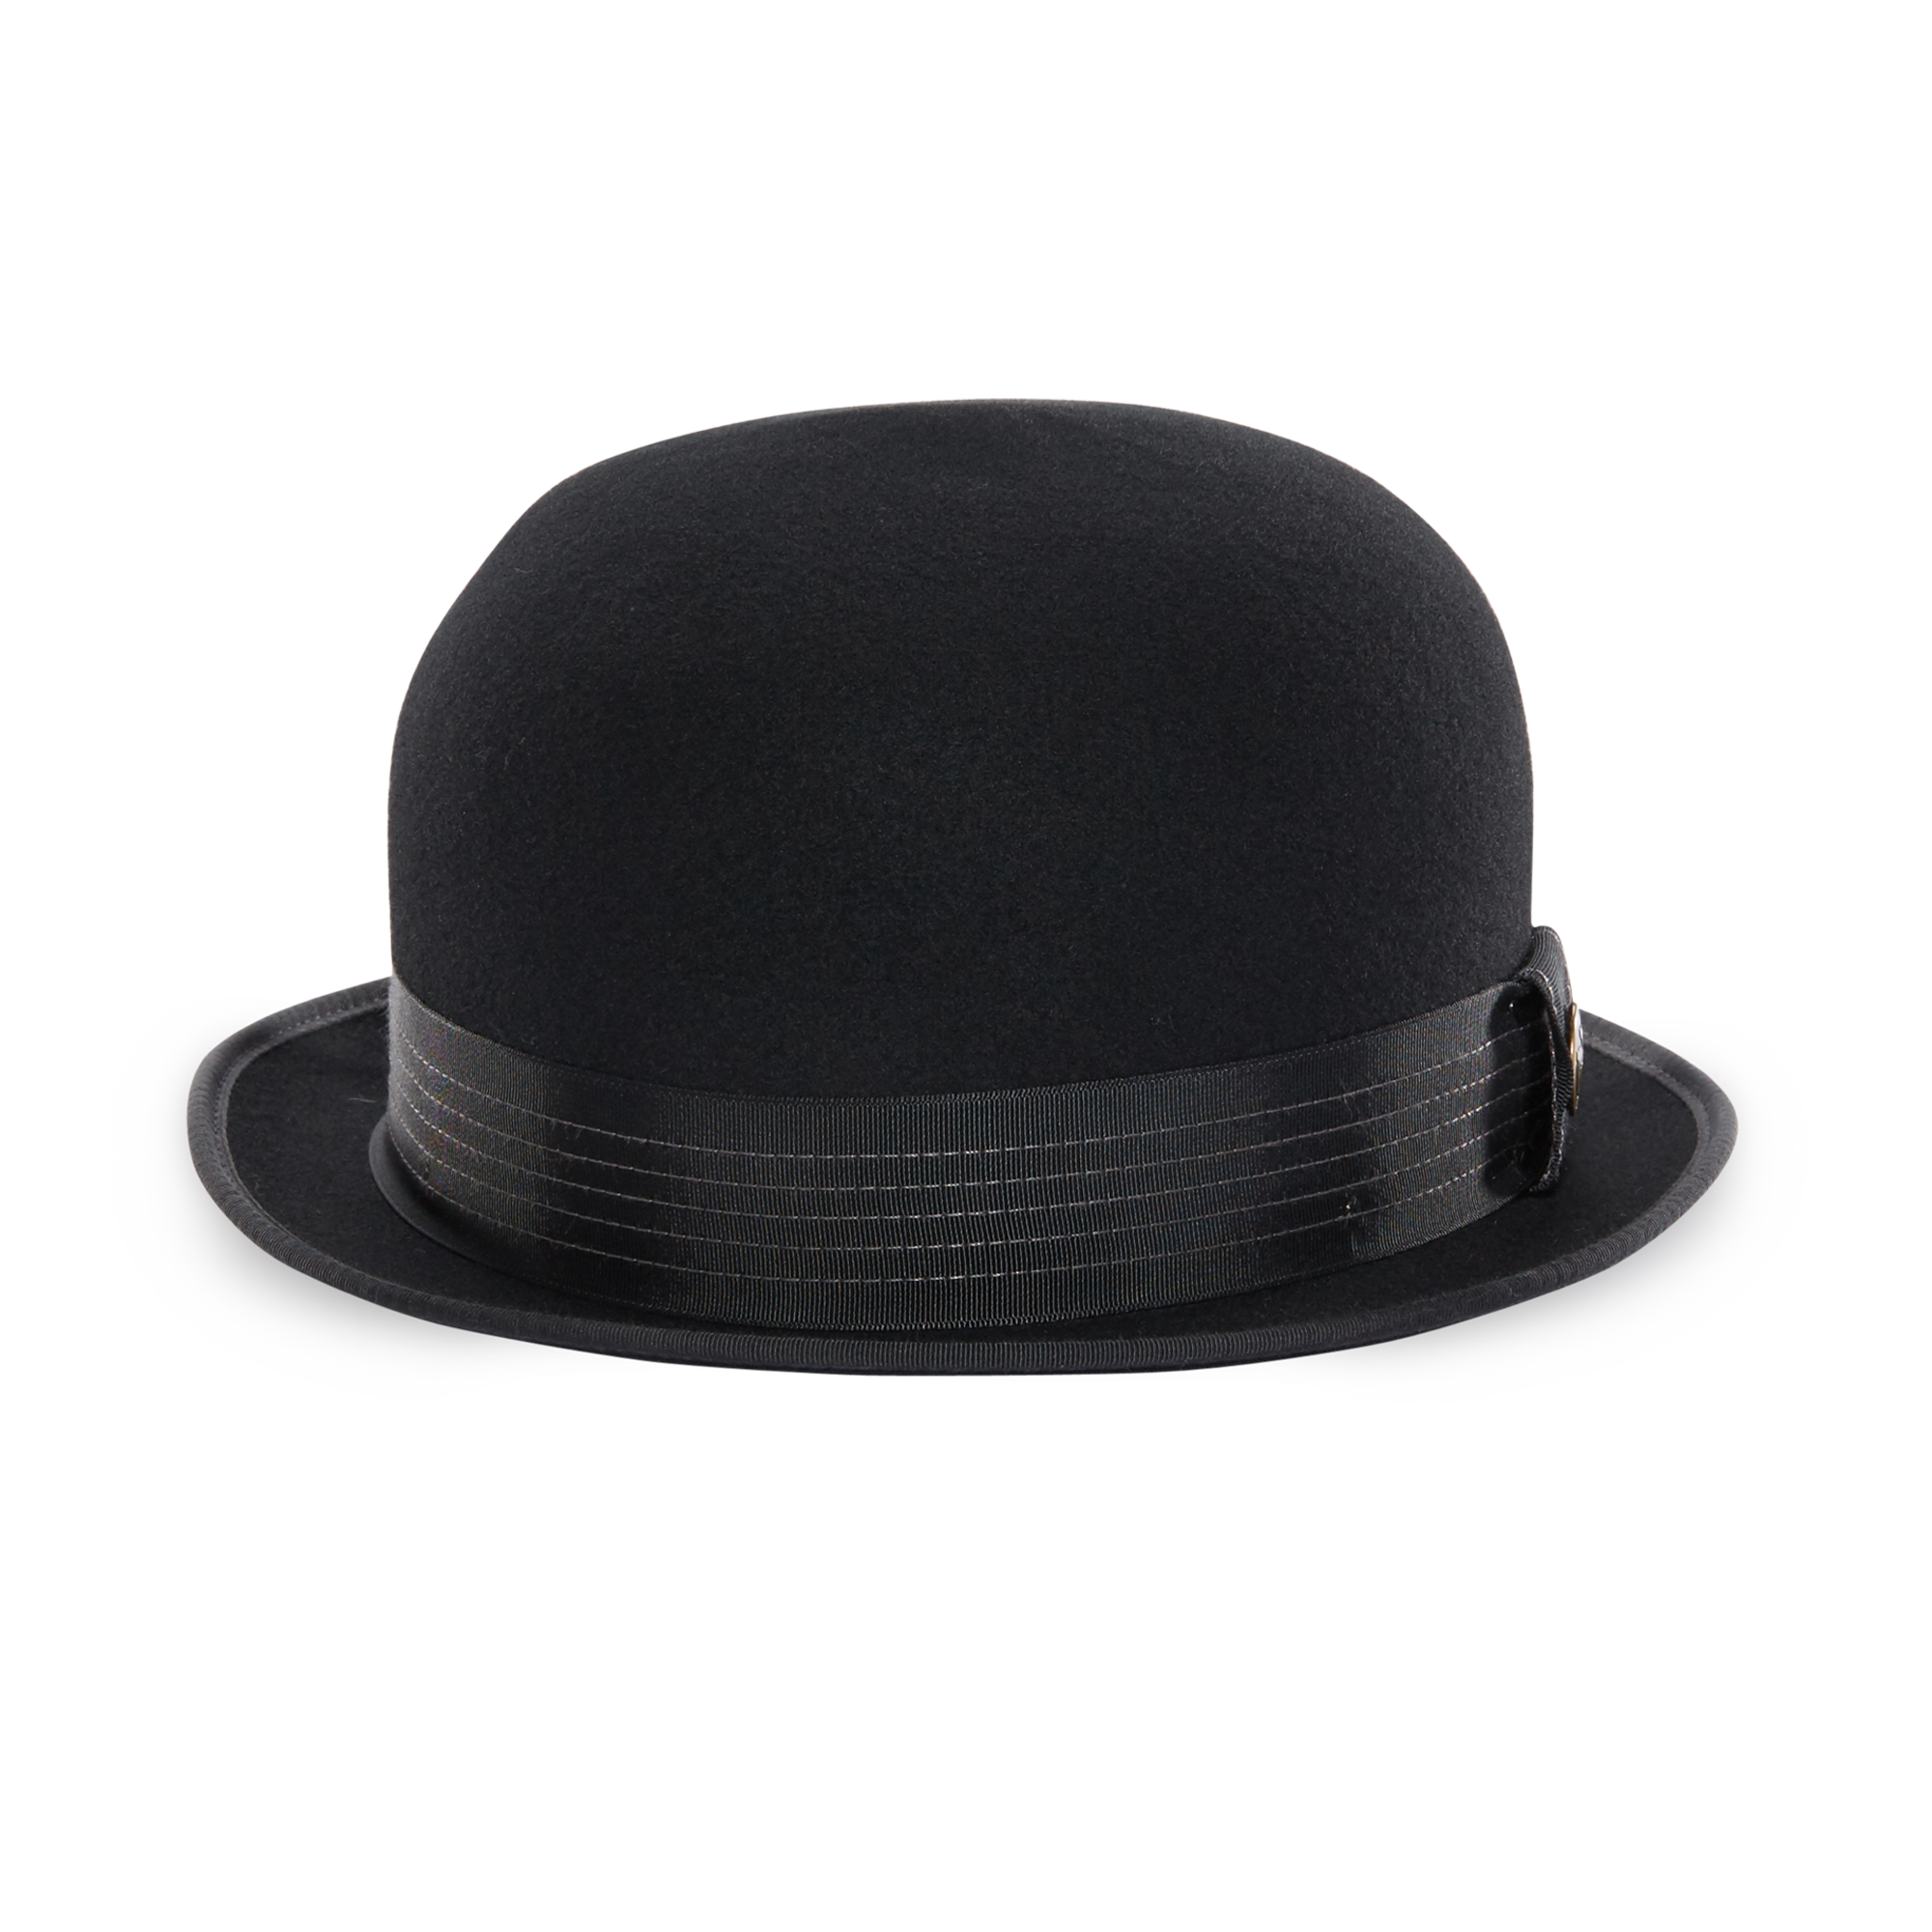 Bowler Hat PNG-PlusPNG.com-53